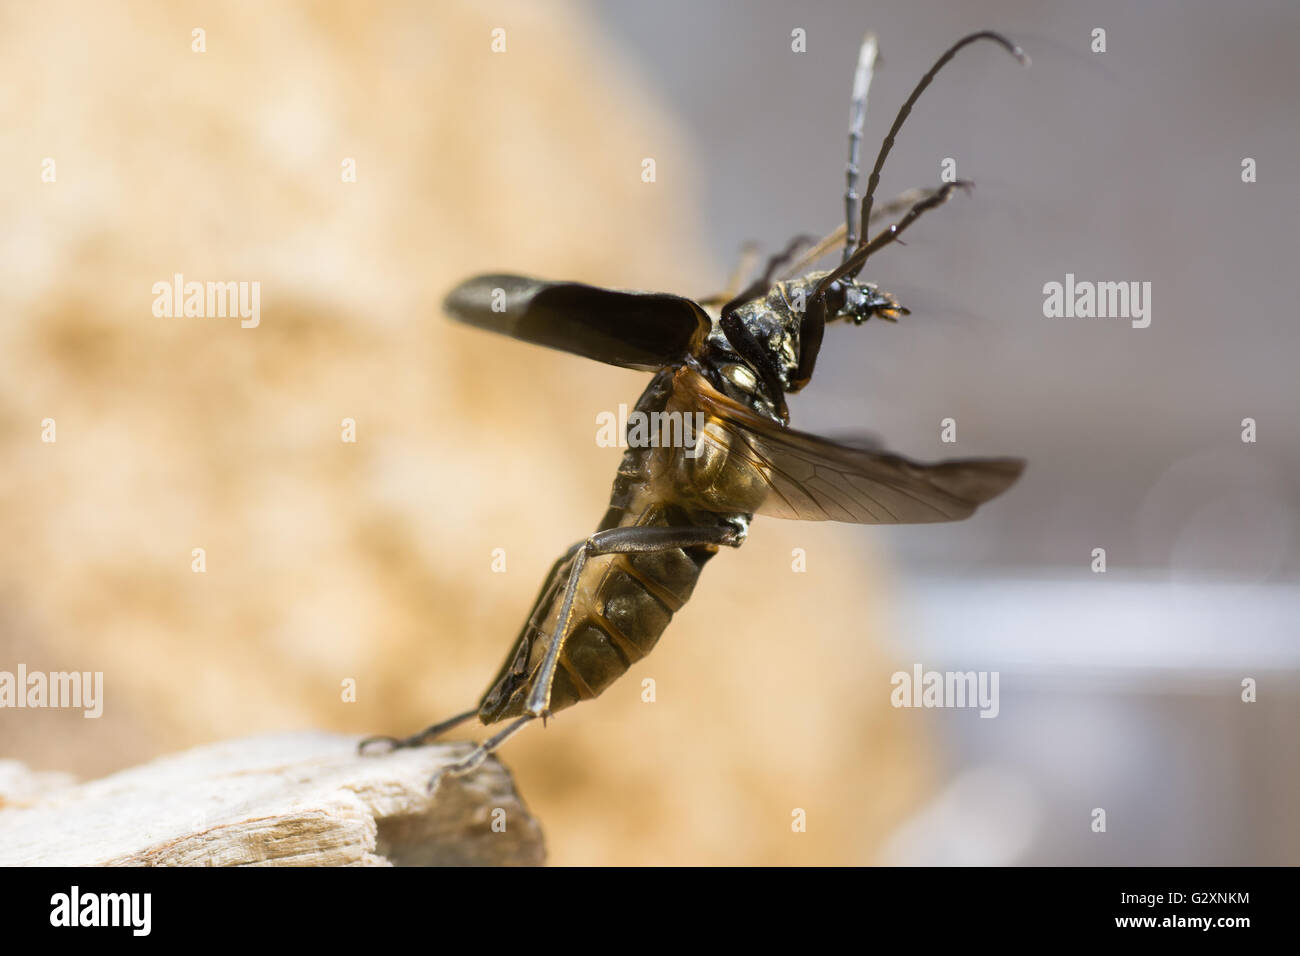 Stenocorus meridianus longhorn beetle taking flight. Insect in family Cerambycidae the longhorns or longicorn beetles taking off Stock Photo